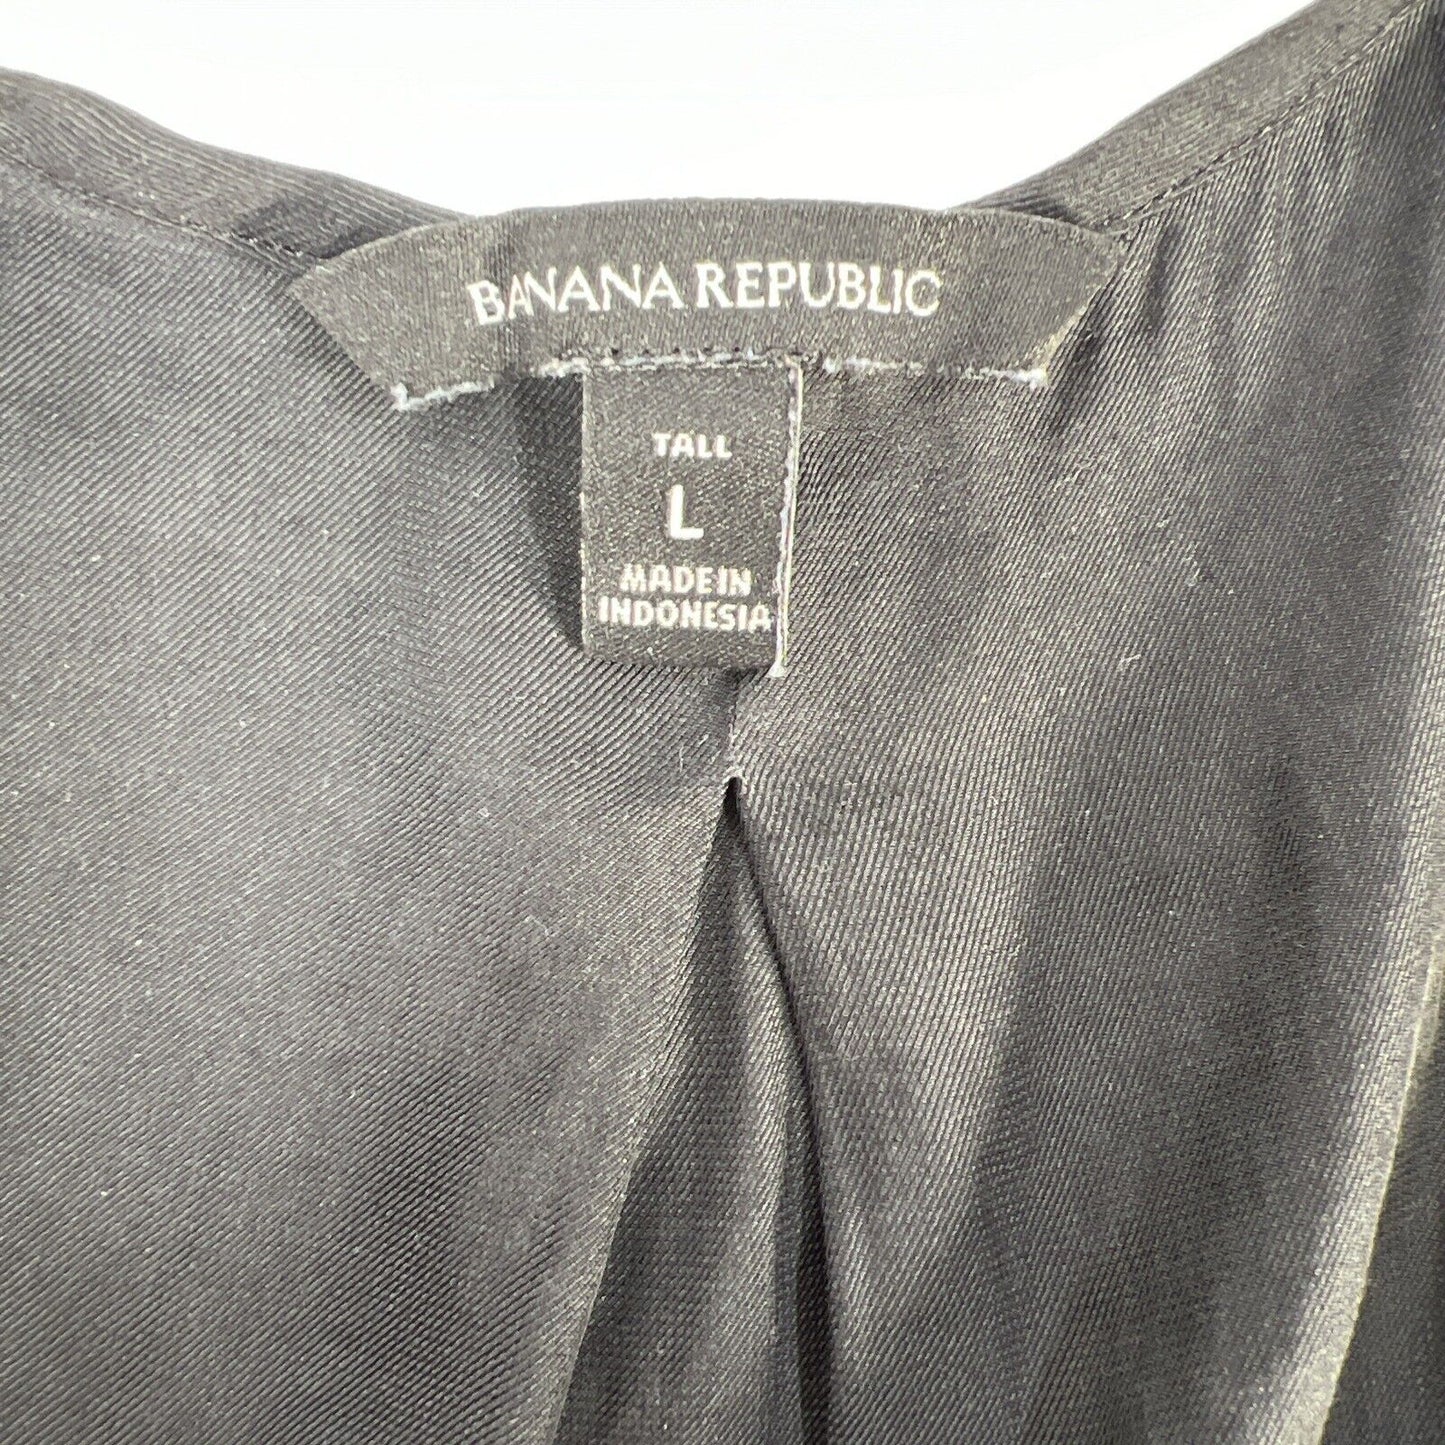 Banana Republic Top negro sin mangas con cuello en V para mujer - Tall L